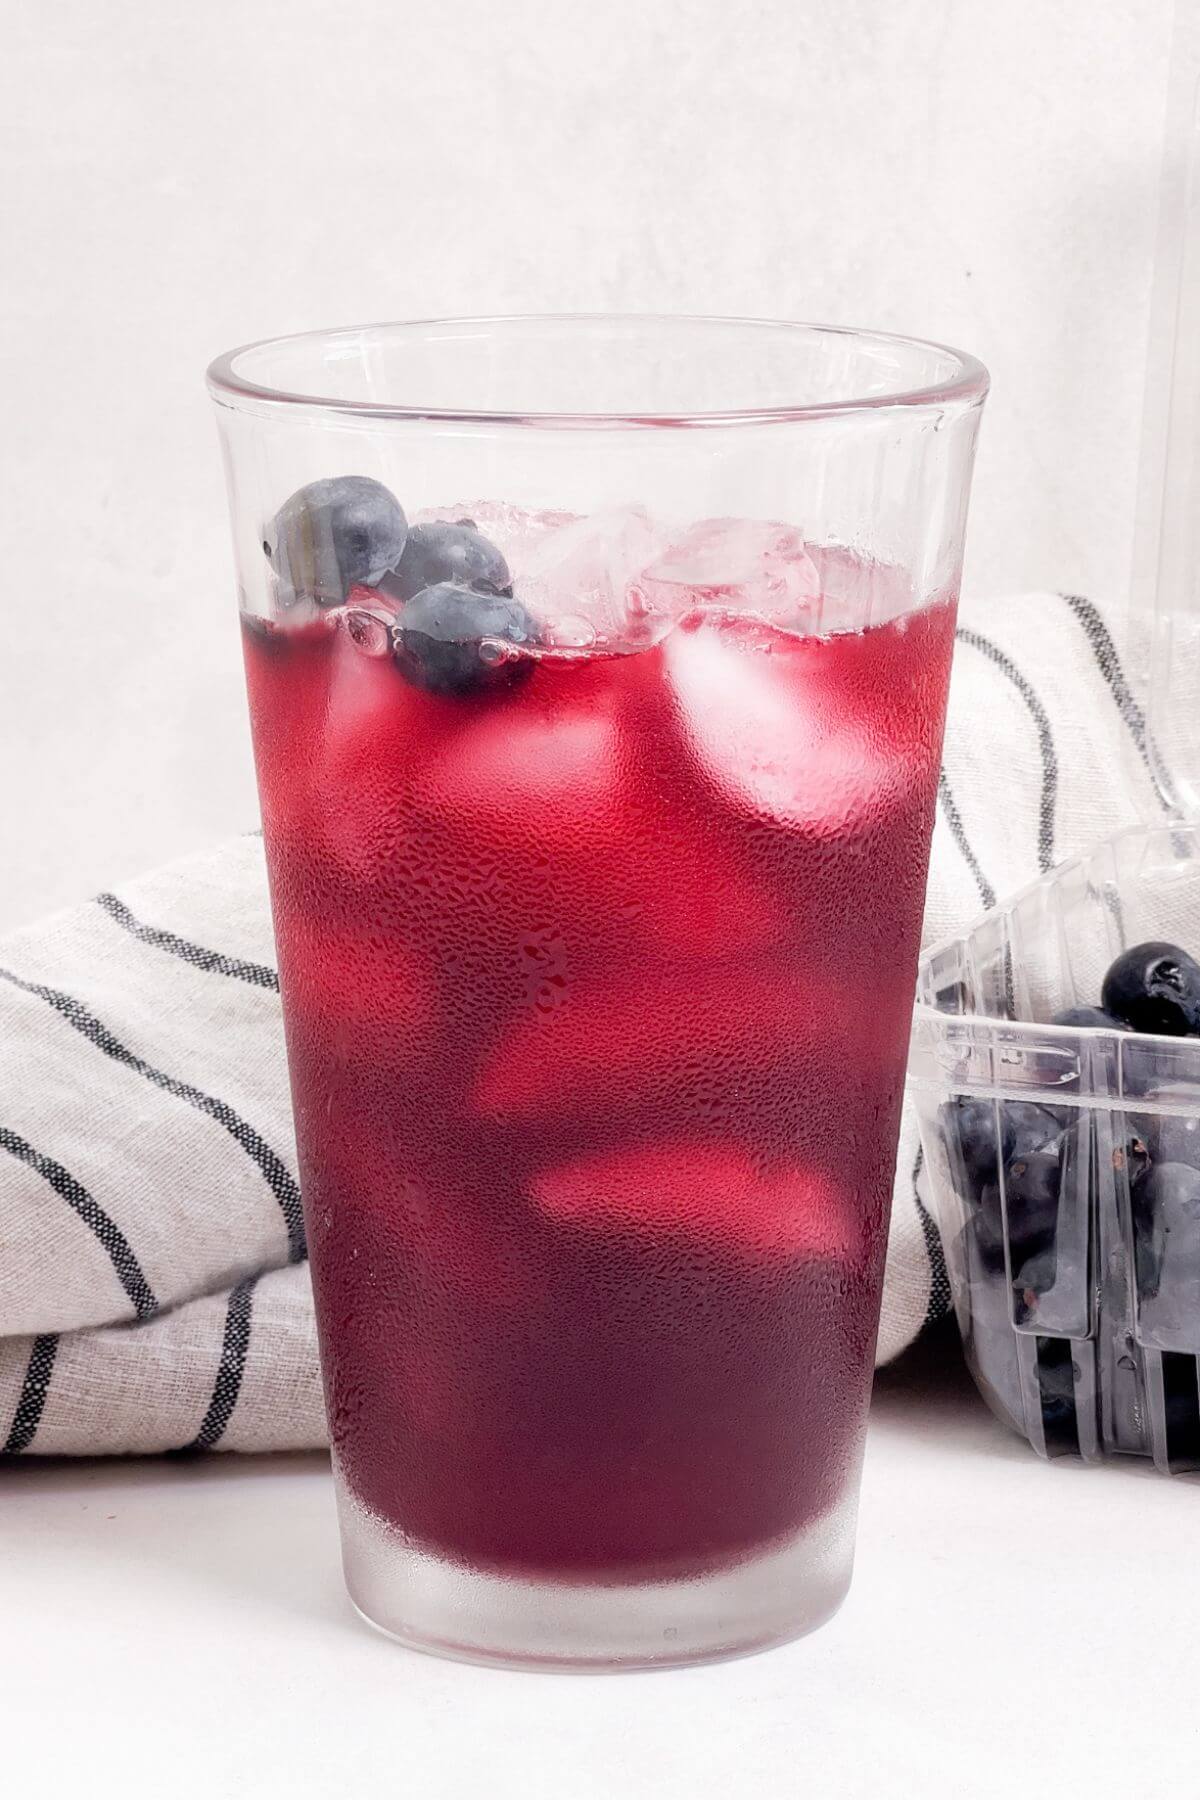 Garnishing blueberry lemonade cocktail with fresh blueberries.